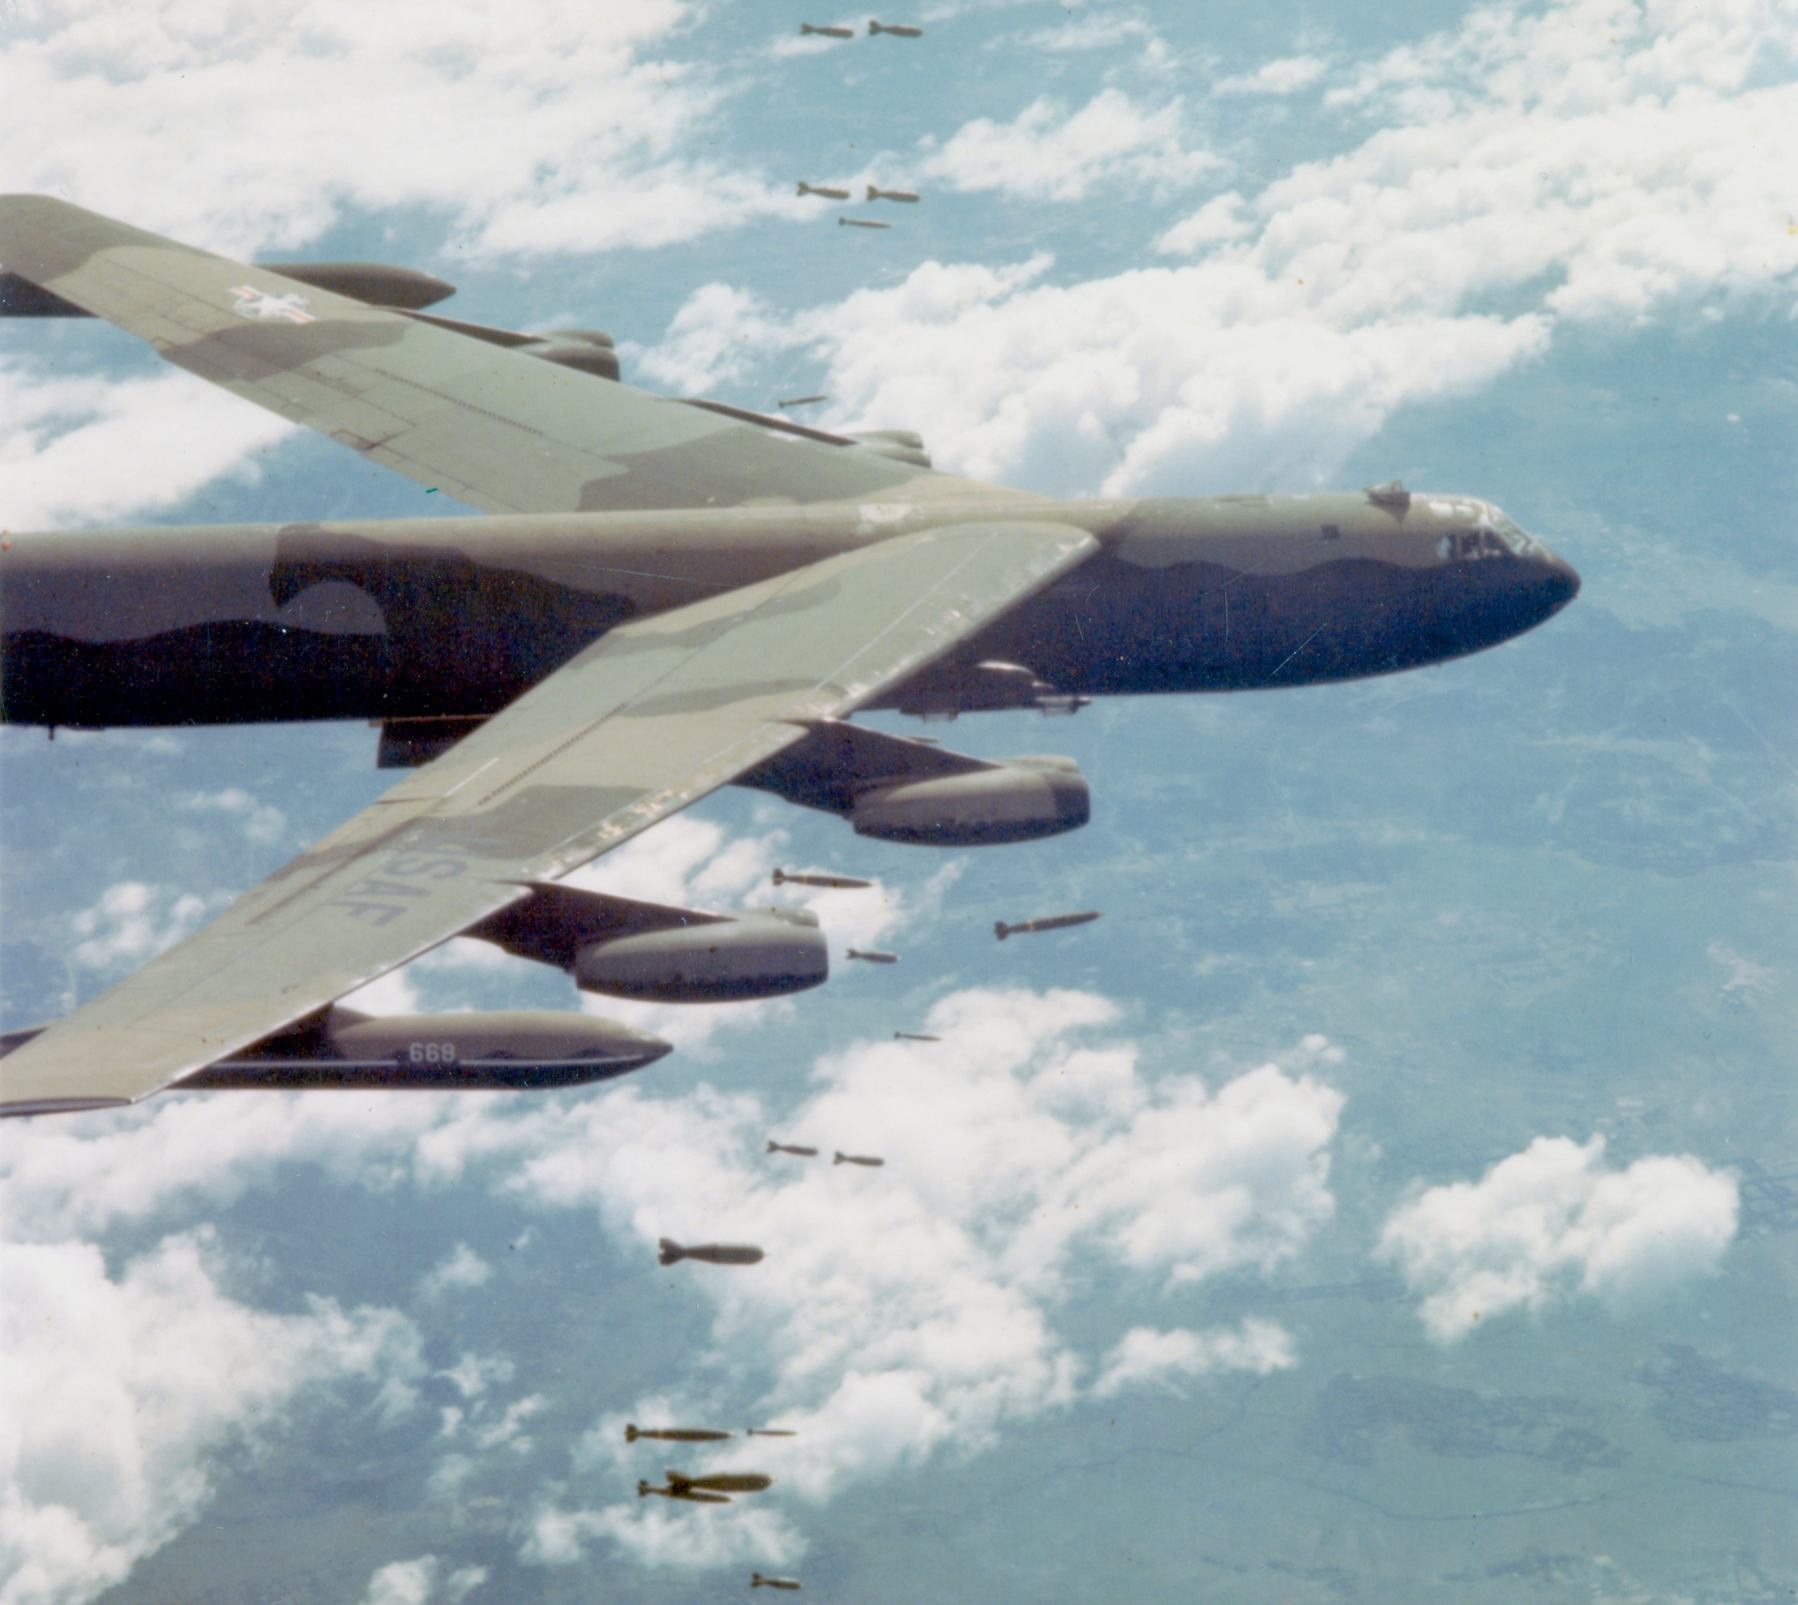 http://upload.wikimedia.org/wikipedia/commons/0/0d/B-52D_dropping_bombs_over_Vietnam.jpg